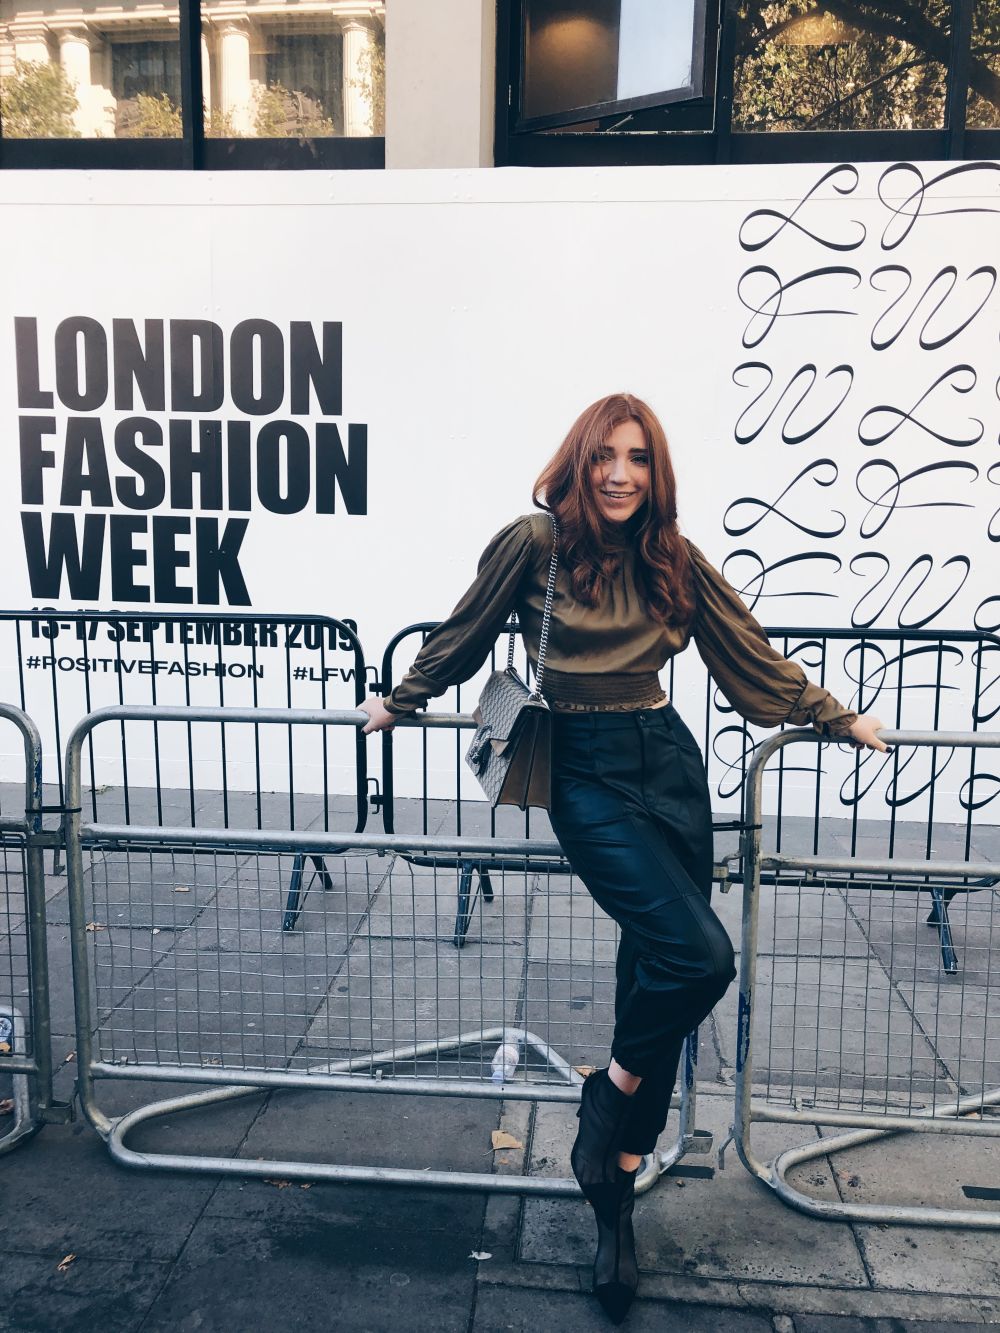 Valerie Worner at London Fashion Week